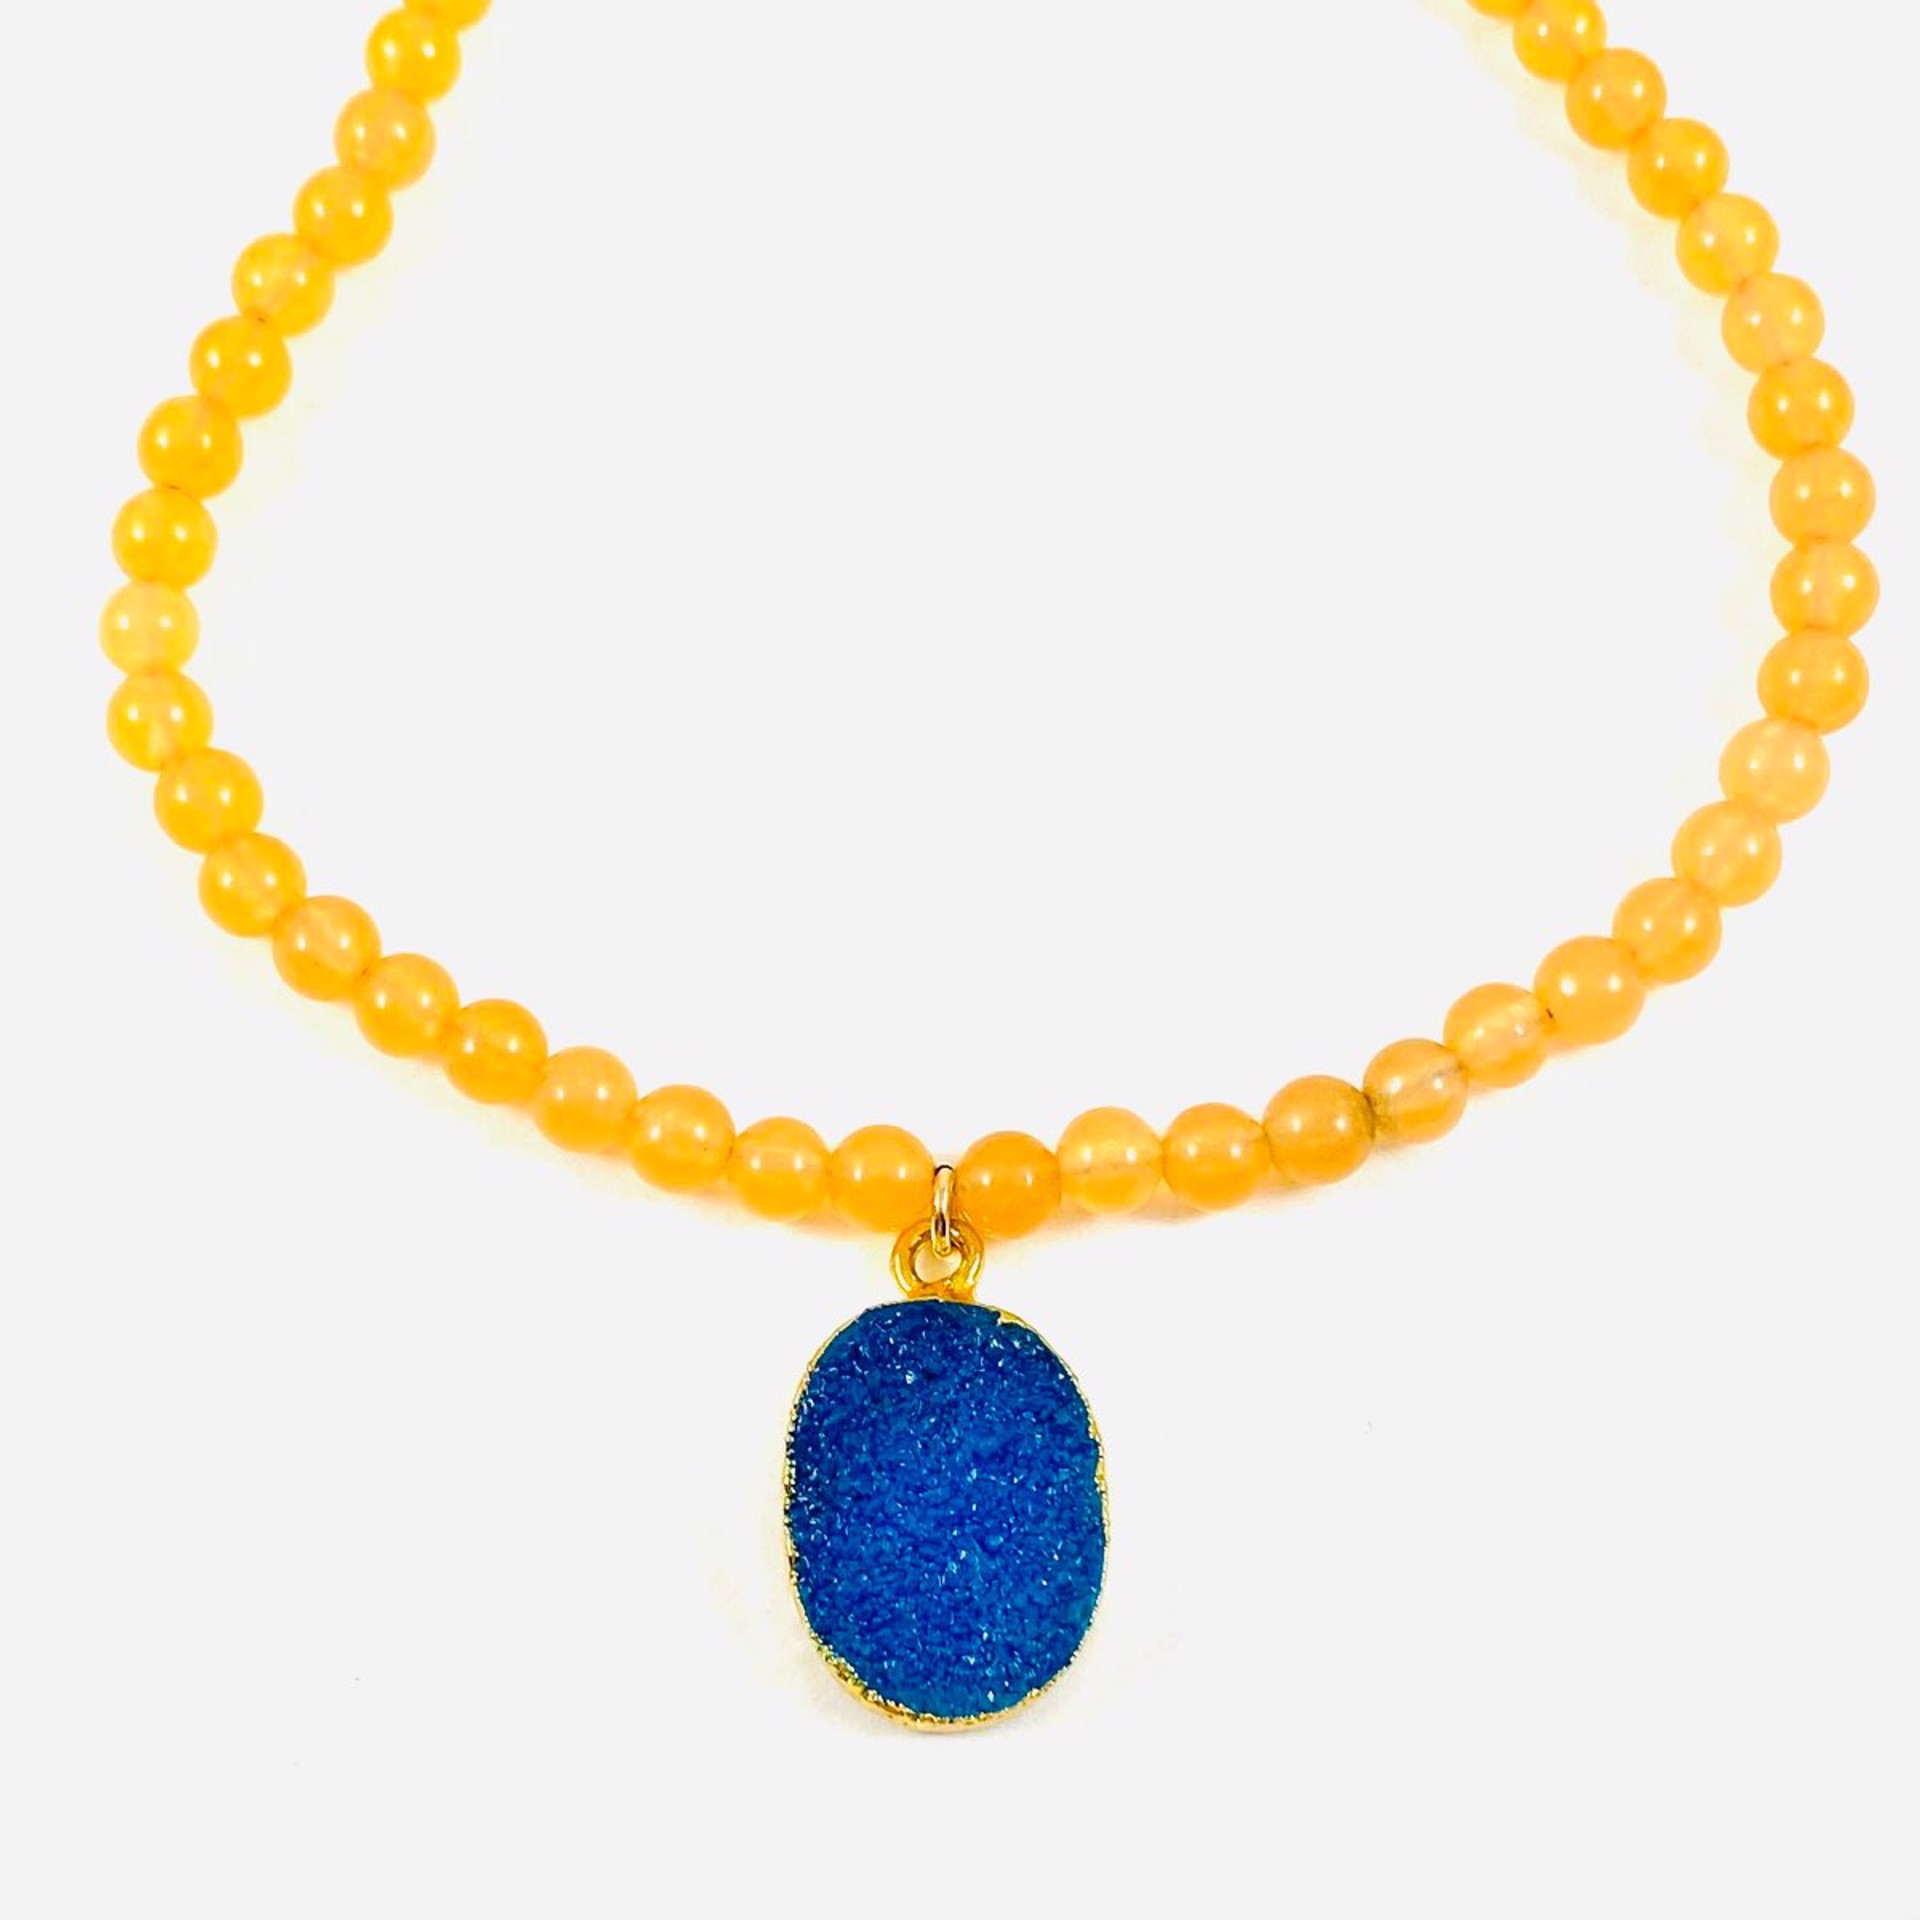 Orange Jade Aqua Druzy Pendant Necklace by Nance Trueworthy